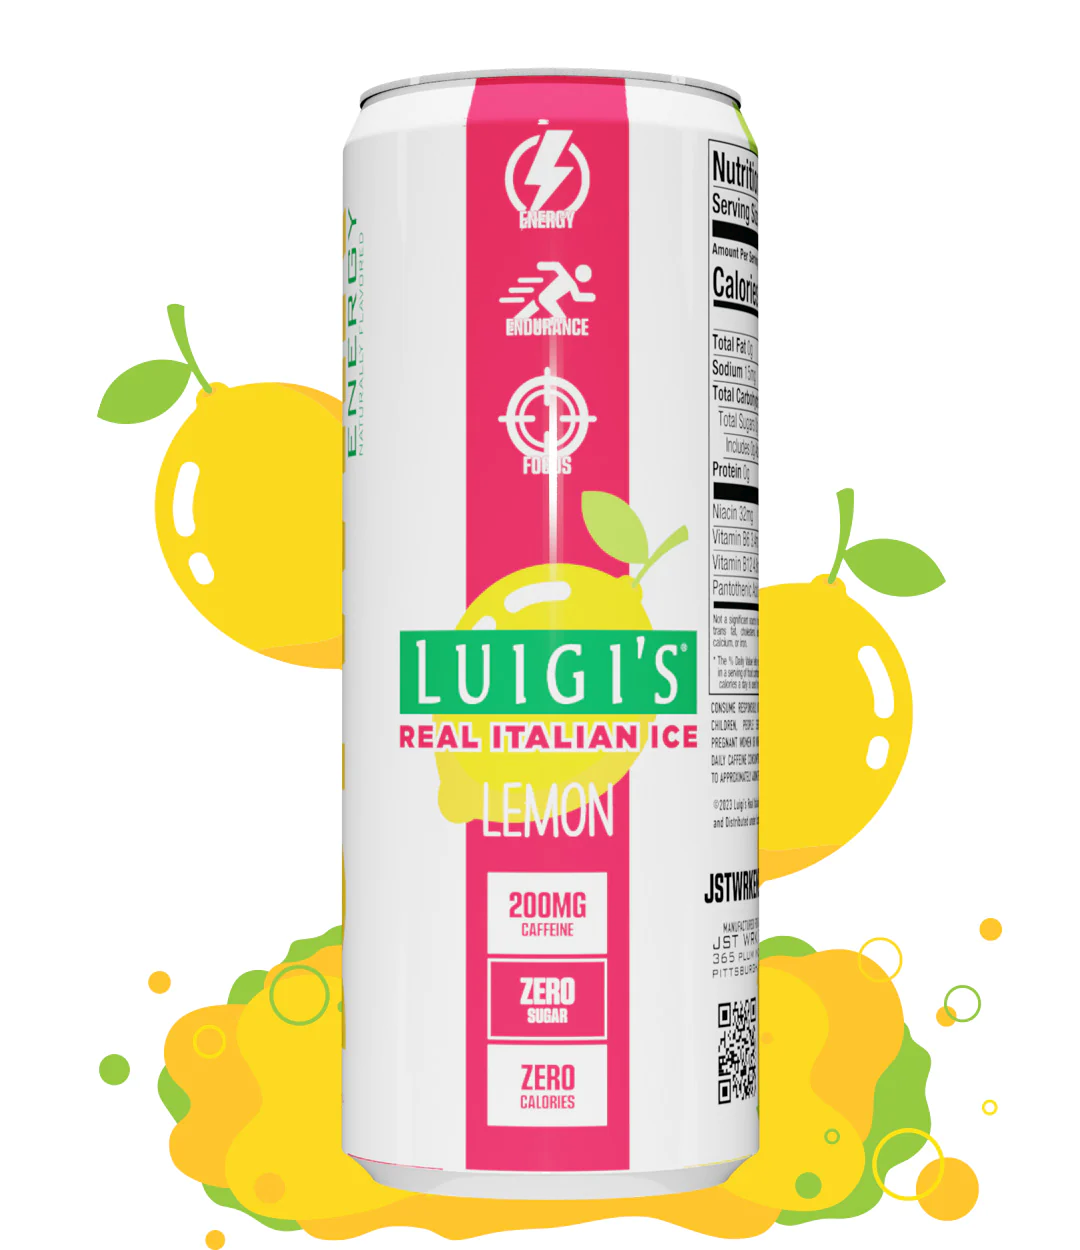 Jst Wrk Energy Drink Luigis Real Italian Ice Lemon 12 X 12 Oz Cans 3983